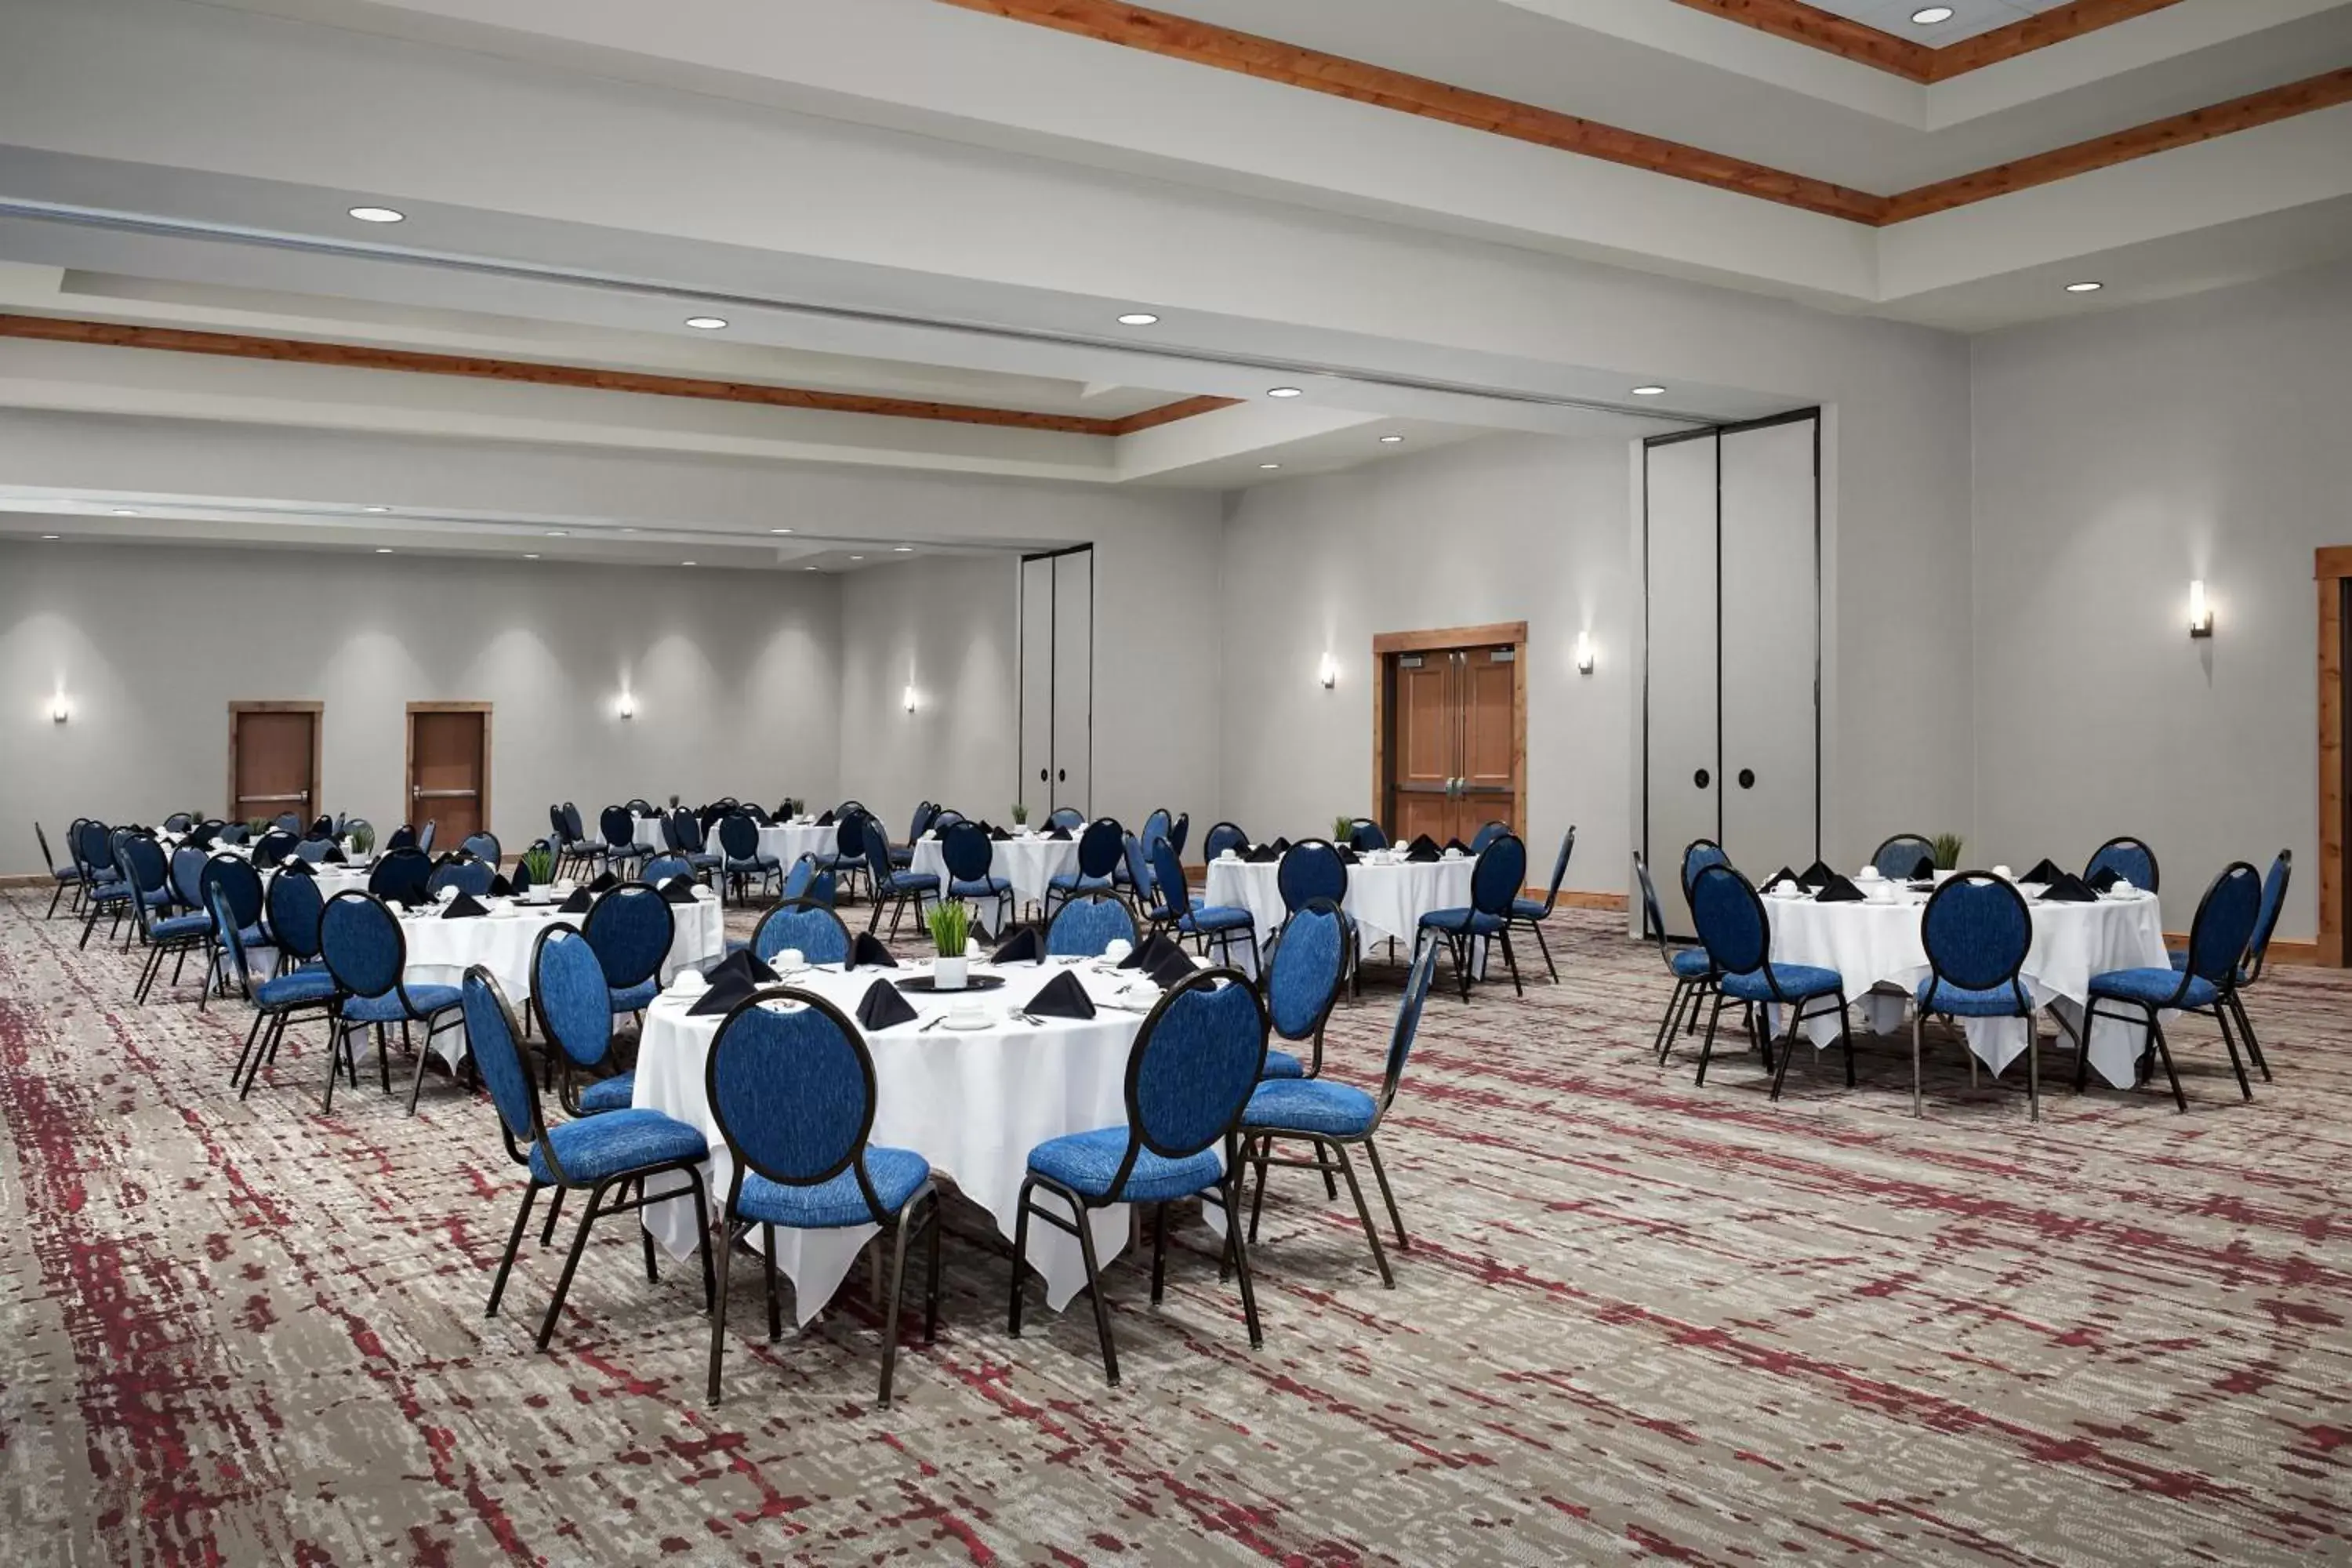 Banquet/Function facilities in Hilton Garden Inn Missoula